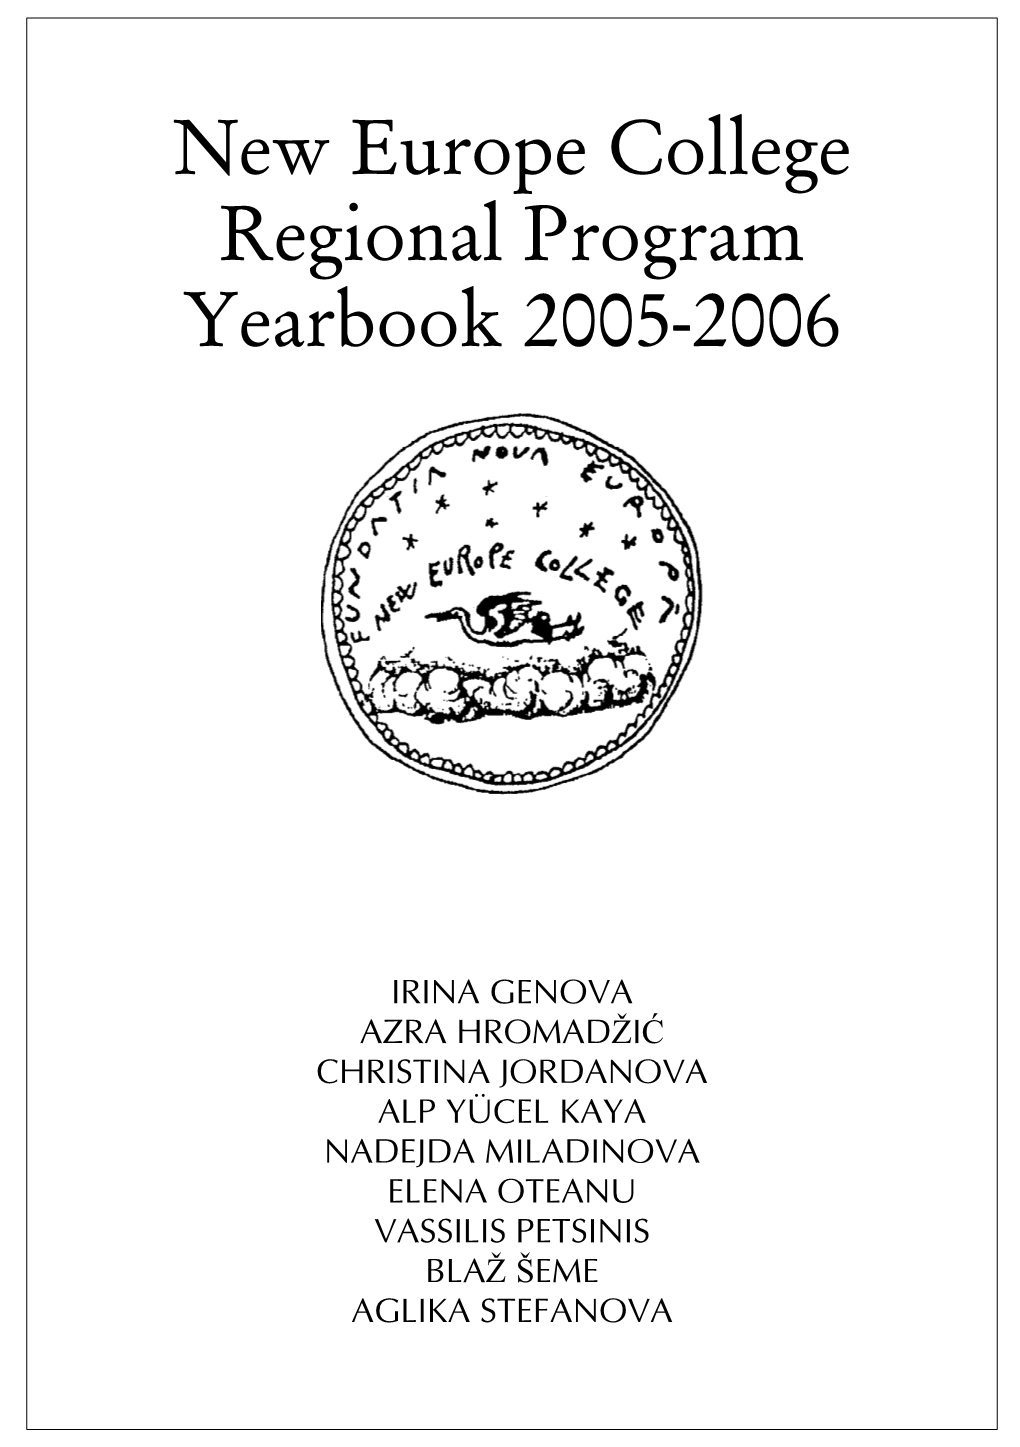 New Europe College Regional Program Yearbook 2005-2006